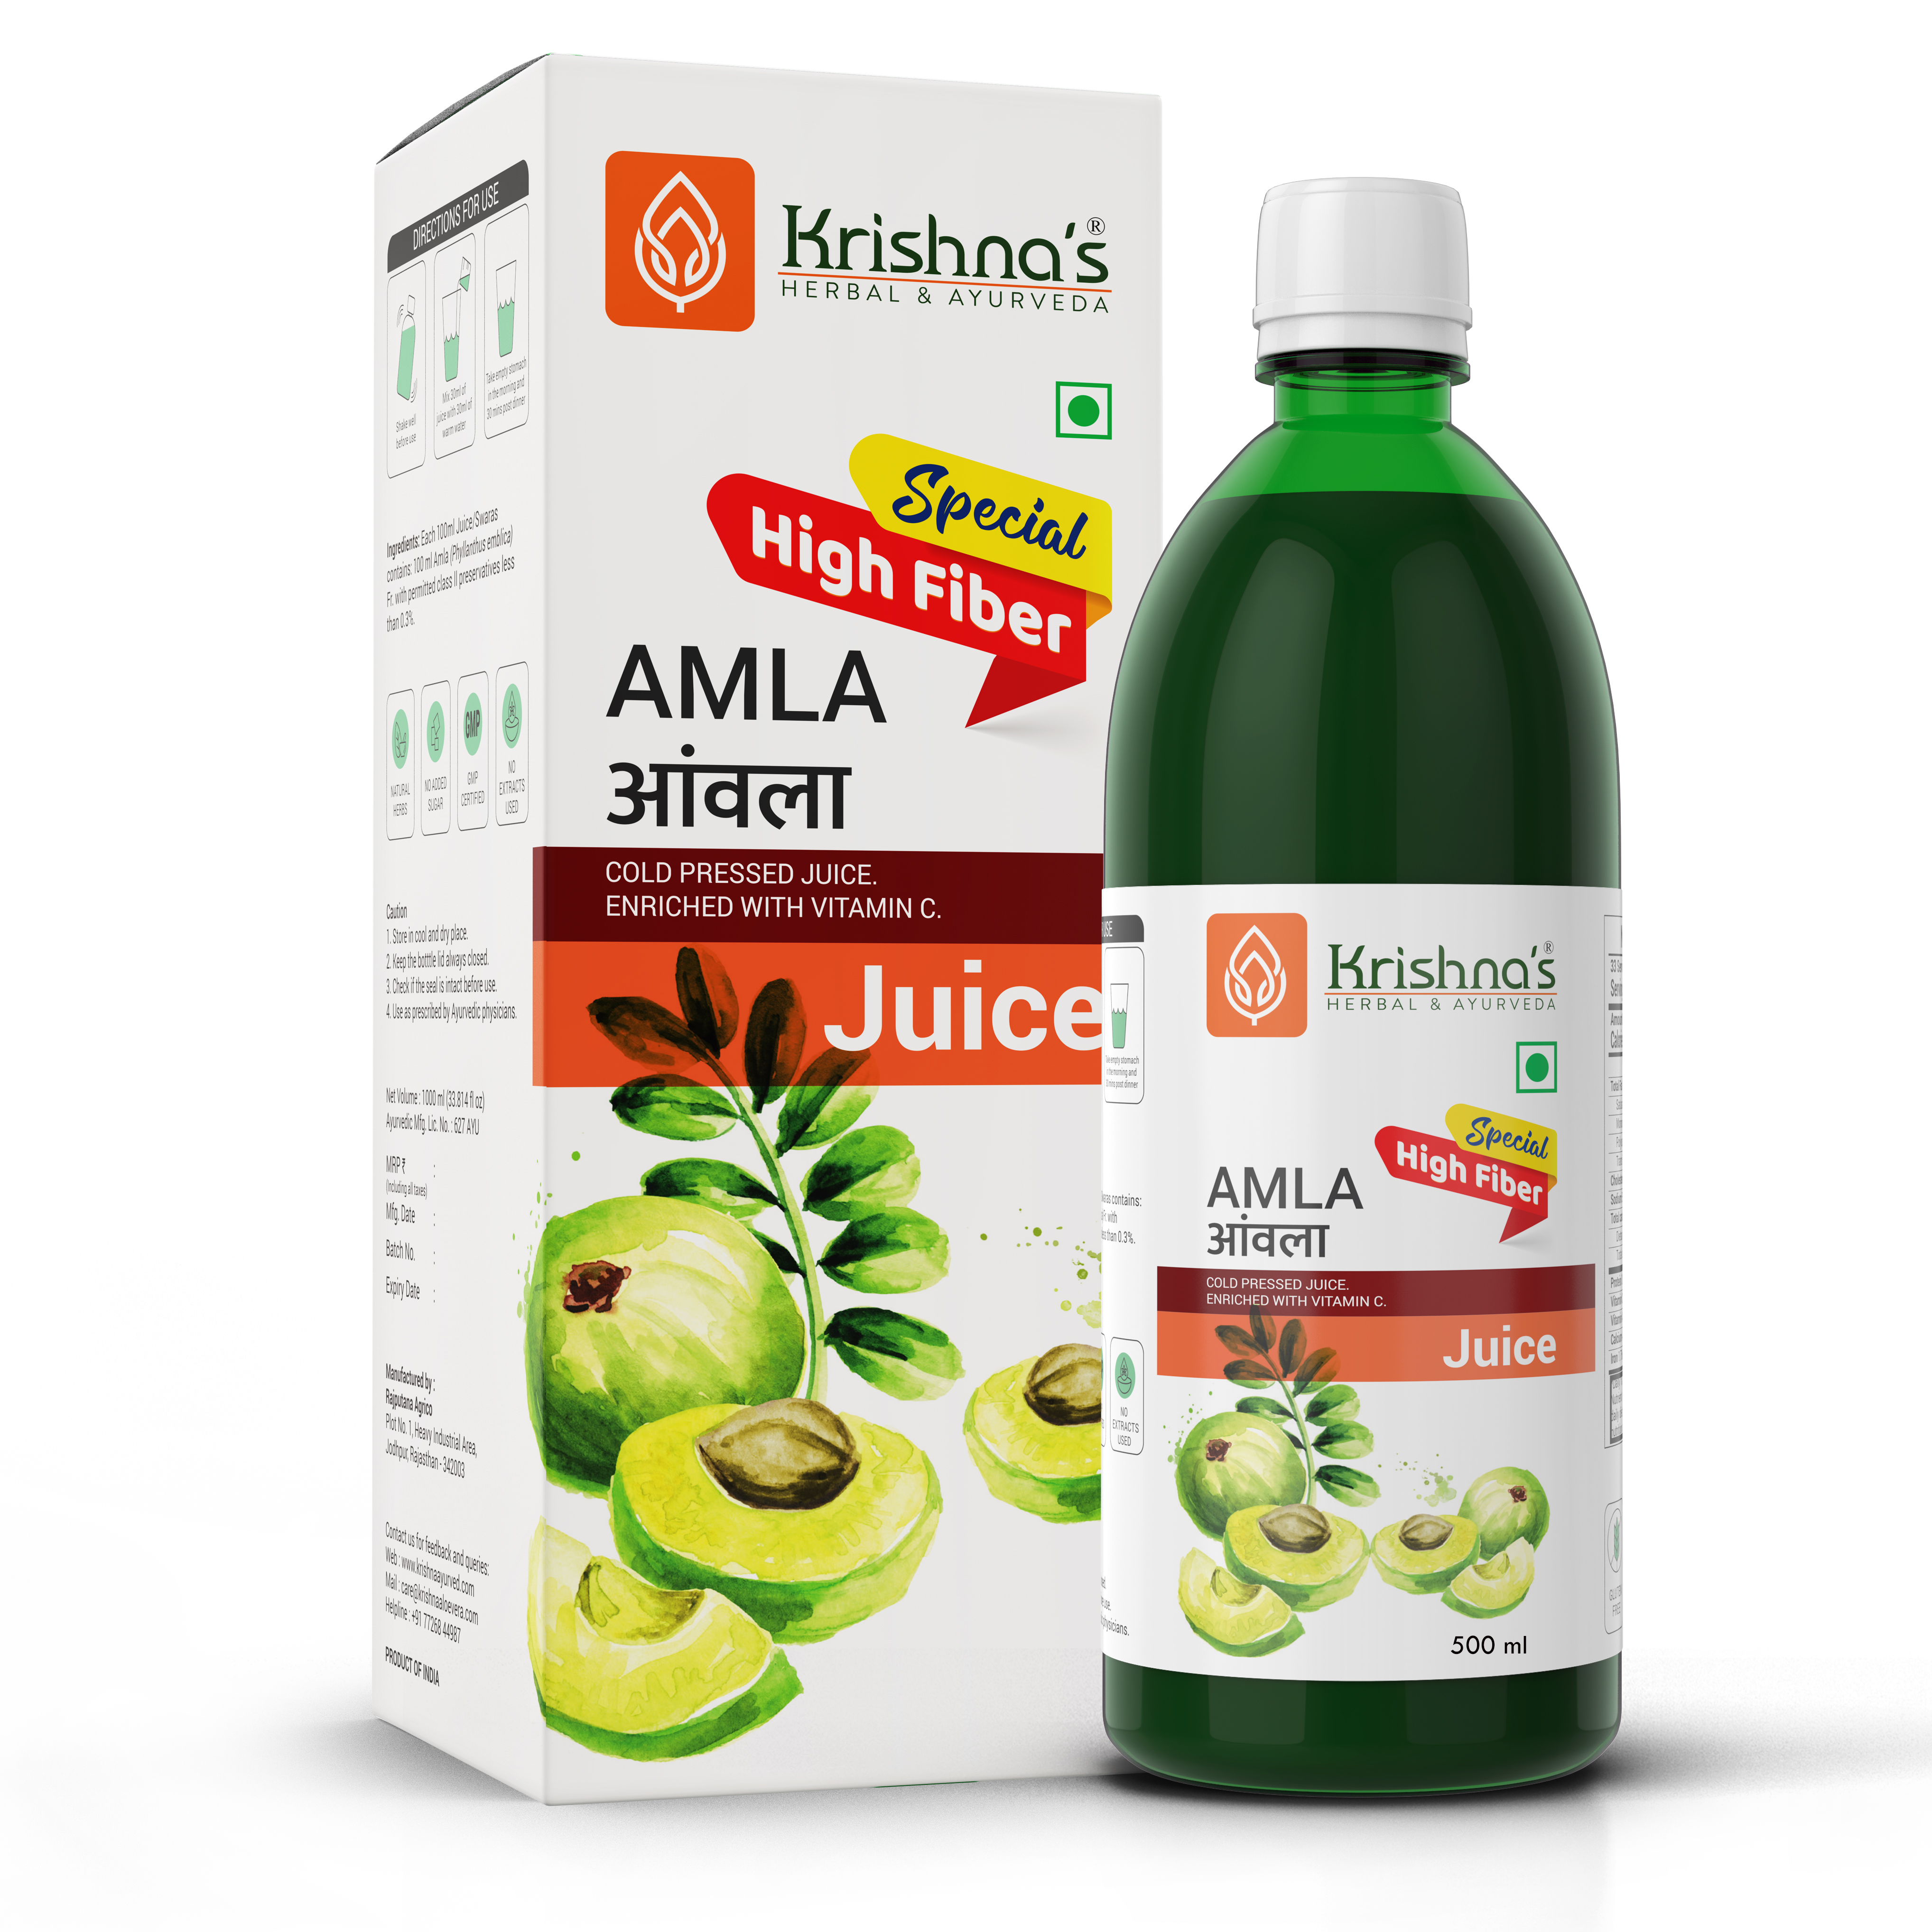 Buy Krishna herbal Amla High Fiber Juice at Best Price Online